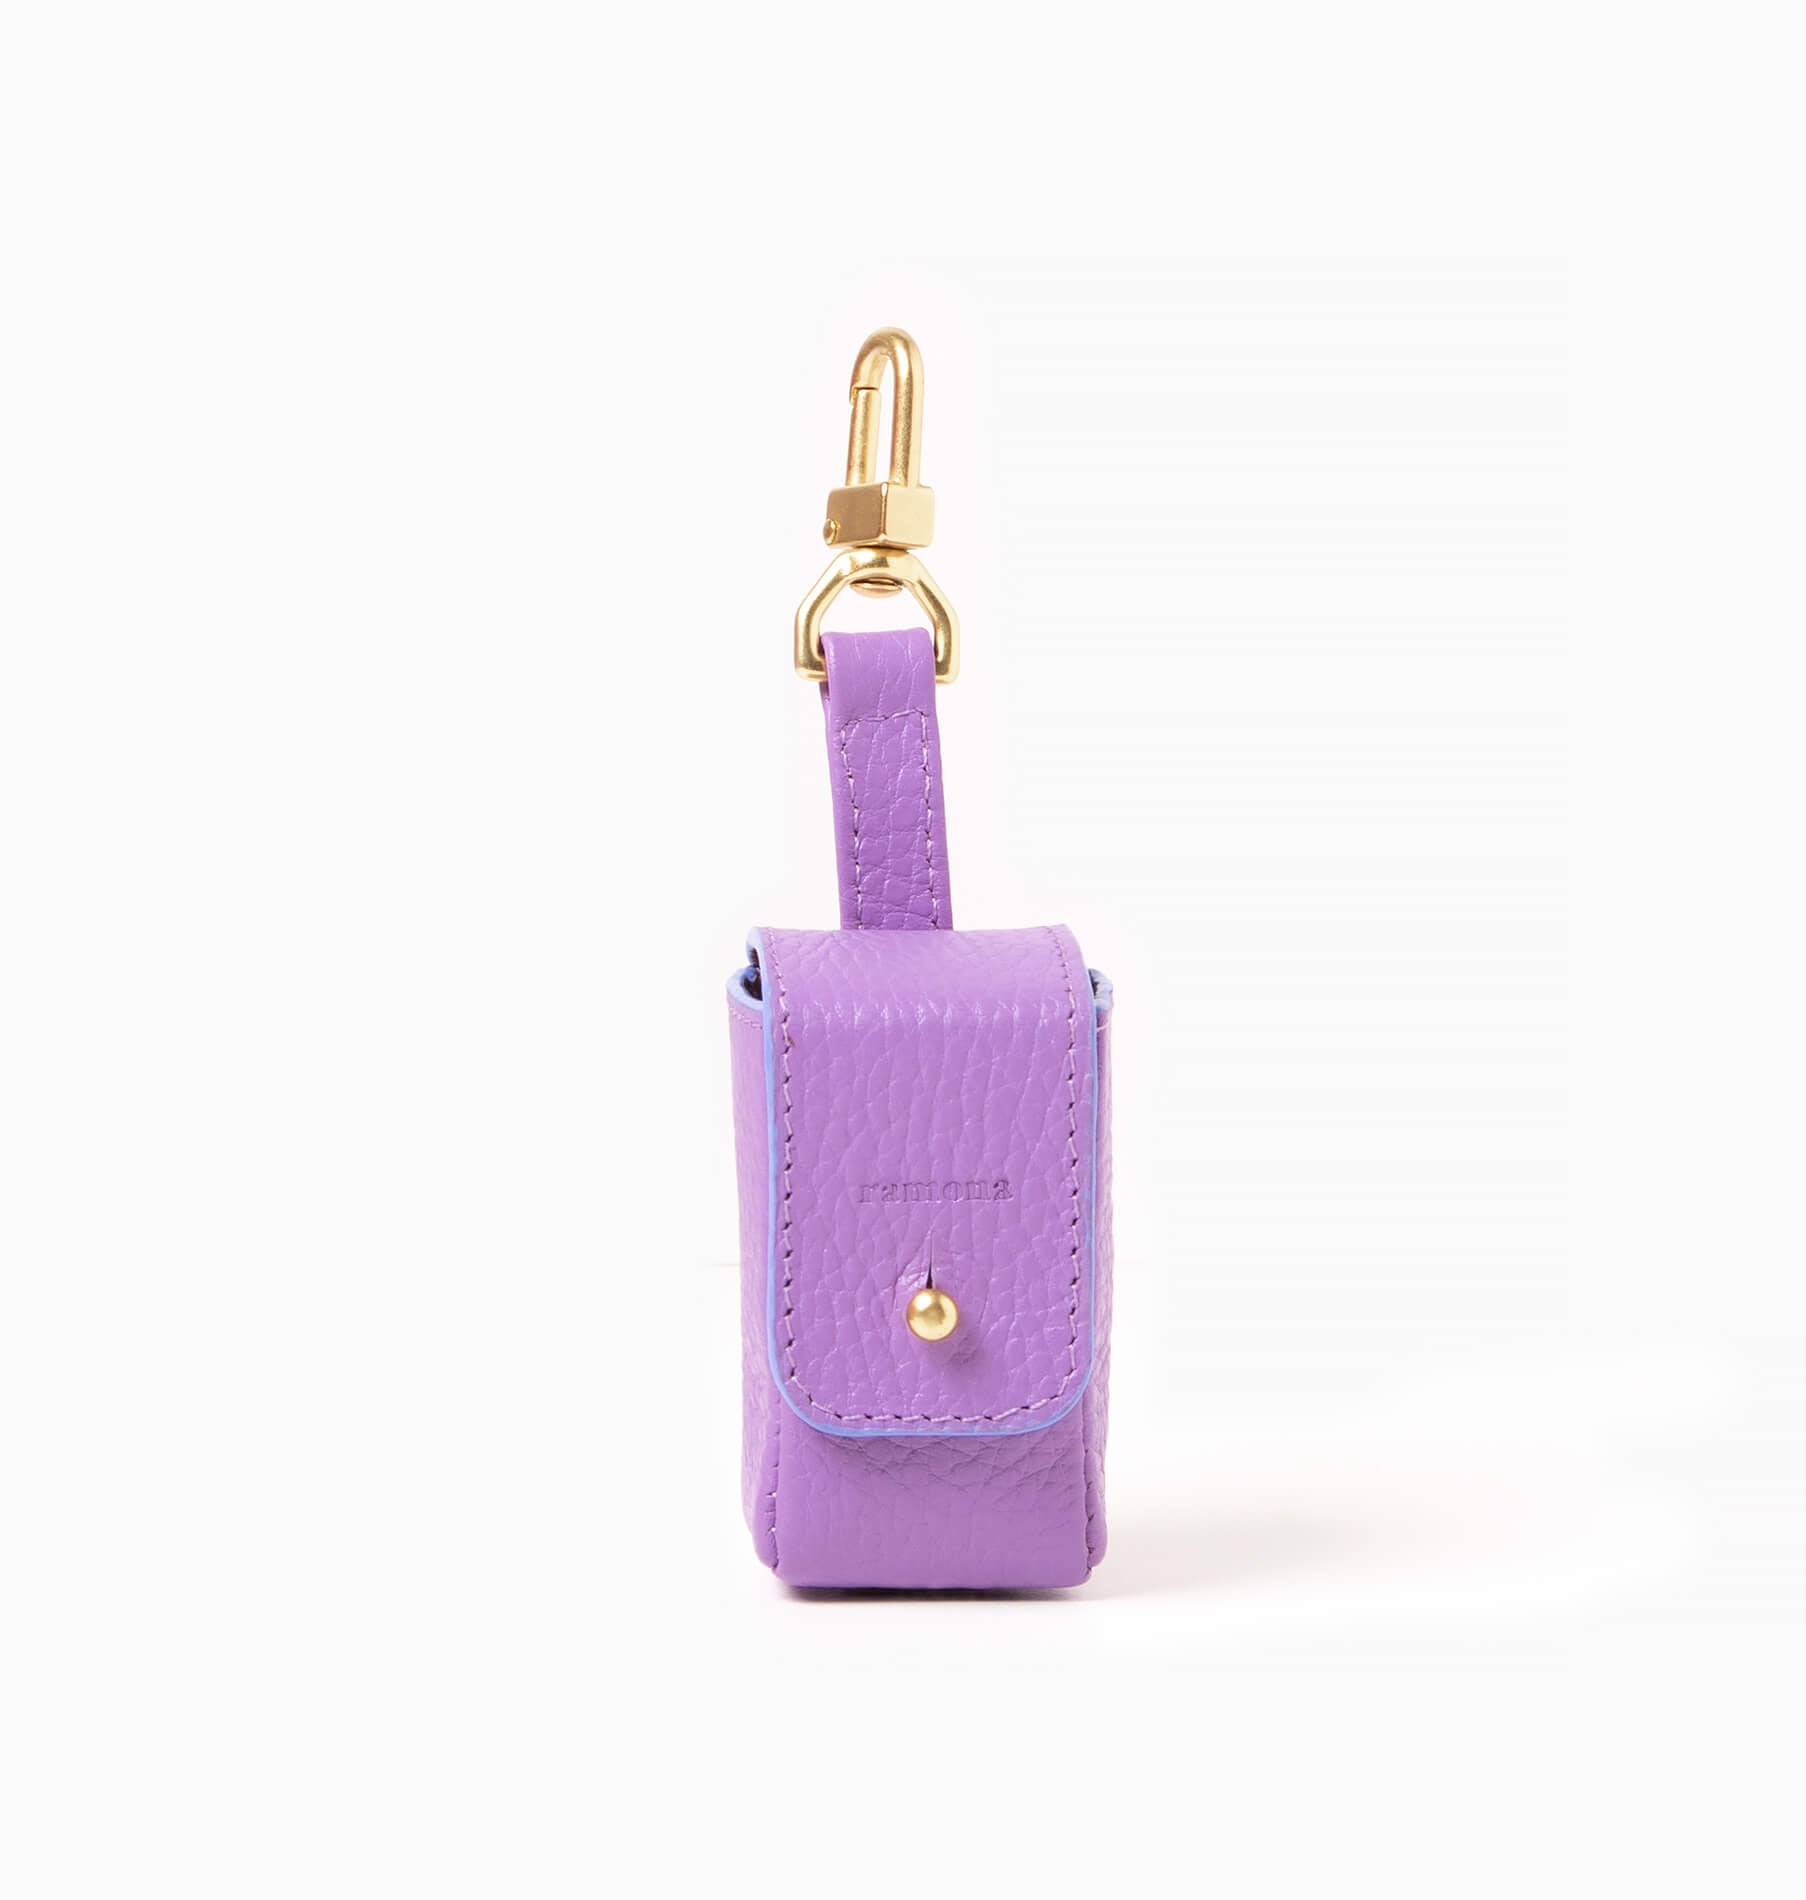 Lilac leather bag holder with with brass hardware. Poop bag holder.